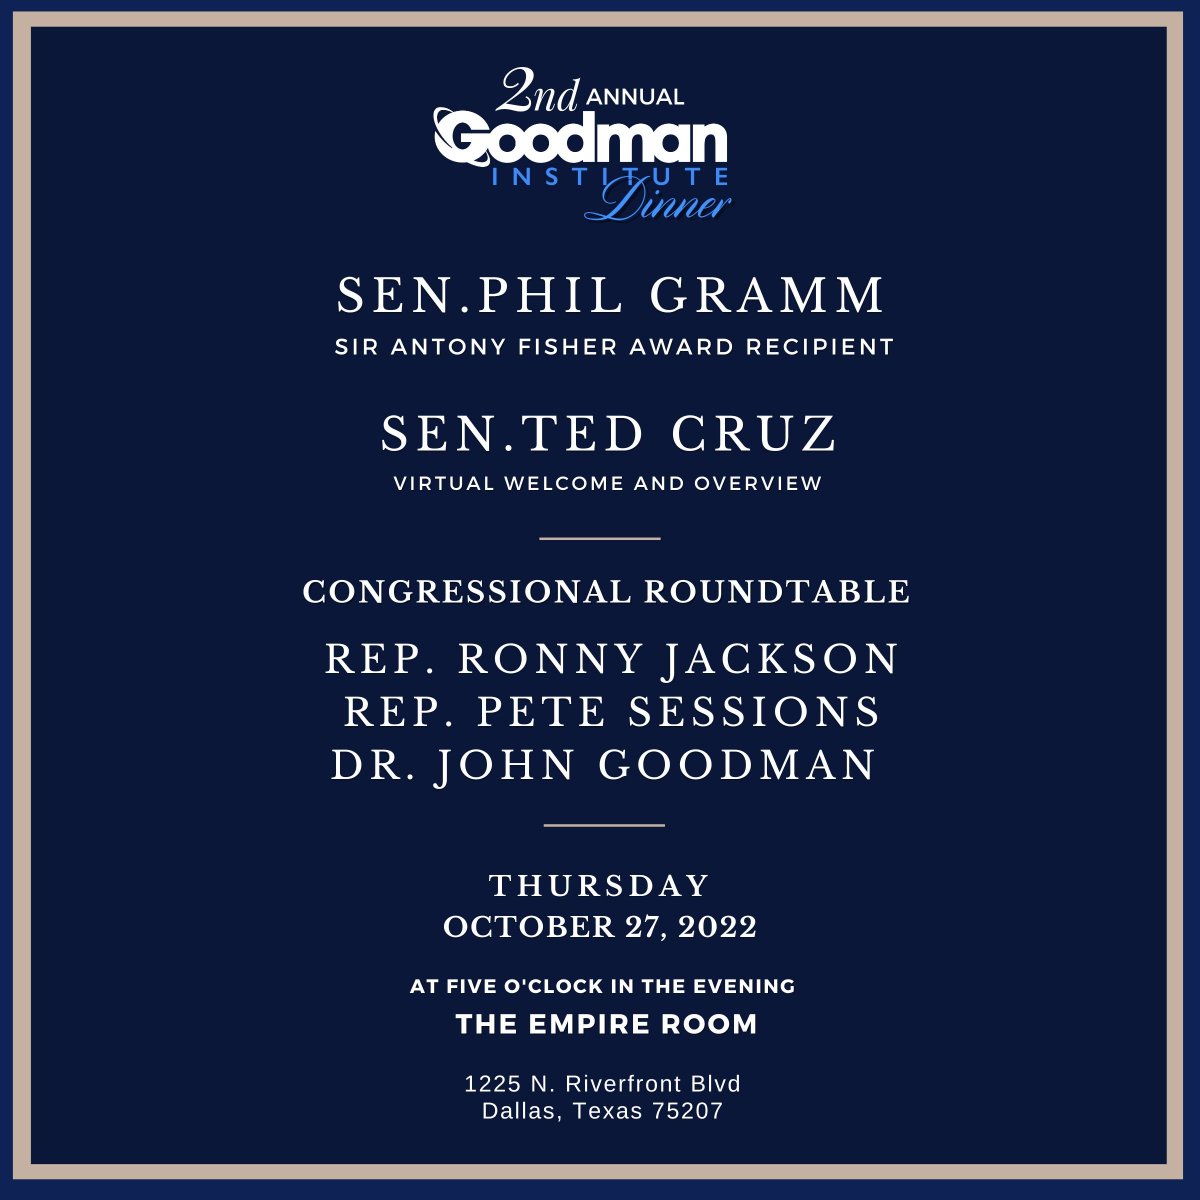 Join us for the 2nd Annual Goodman Institue Dinner! Purchase your tickets through the link below. trifectaem.regfox.com/goodman-instit… #Goodman #philgramm #TedCruz